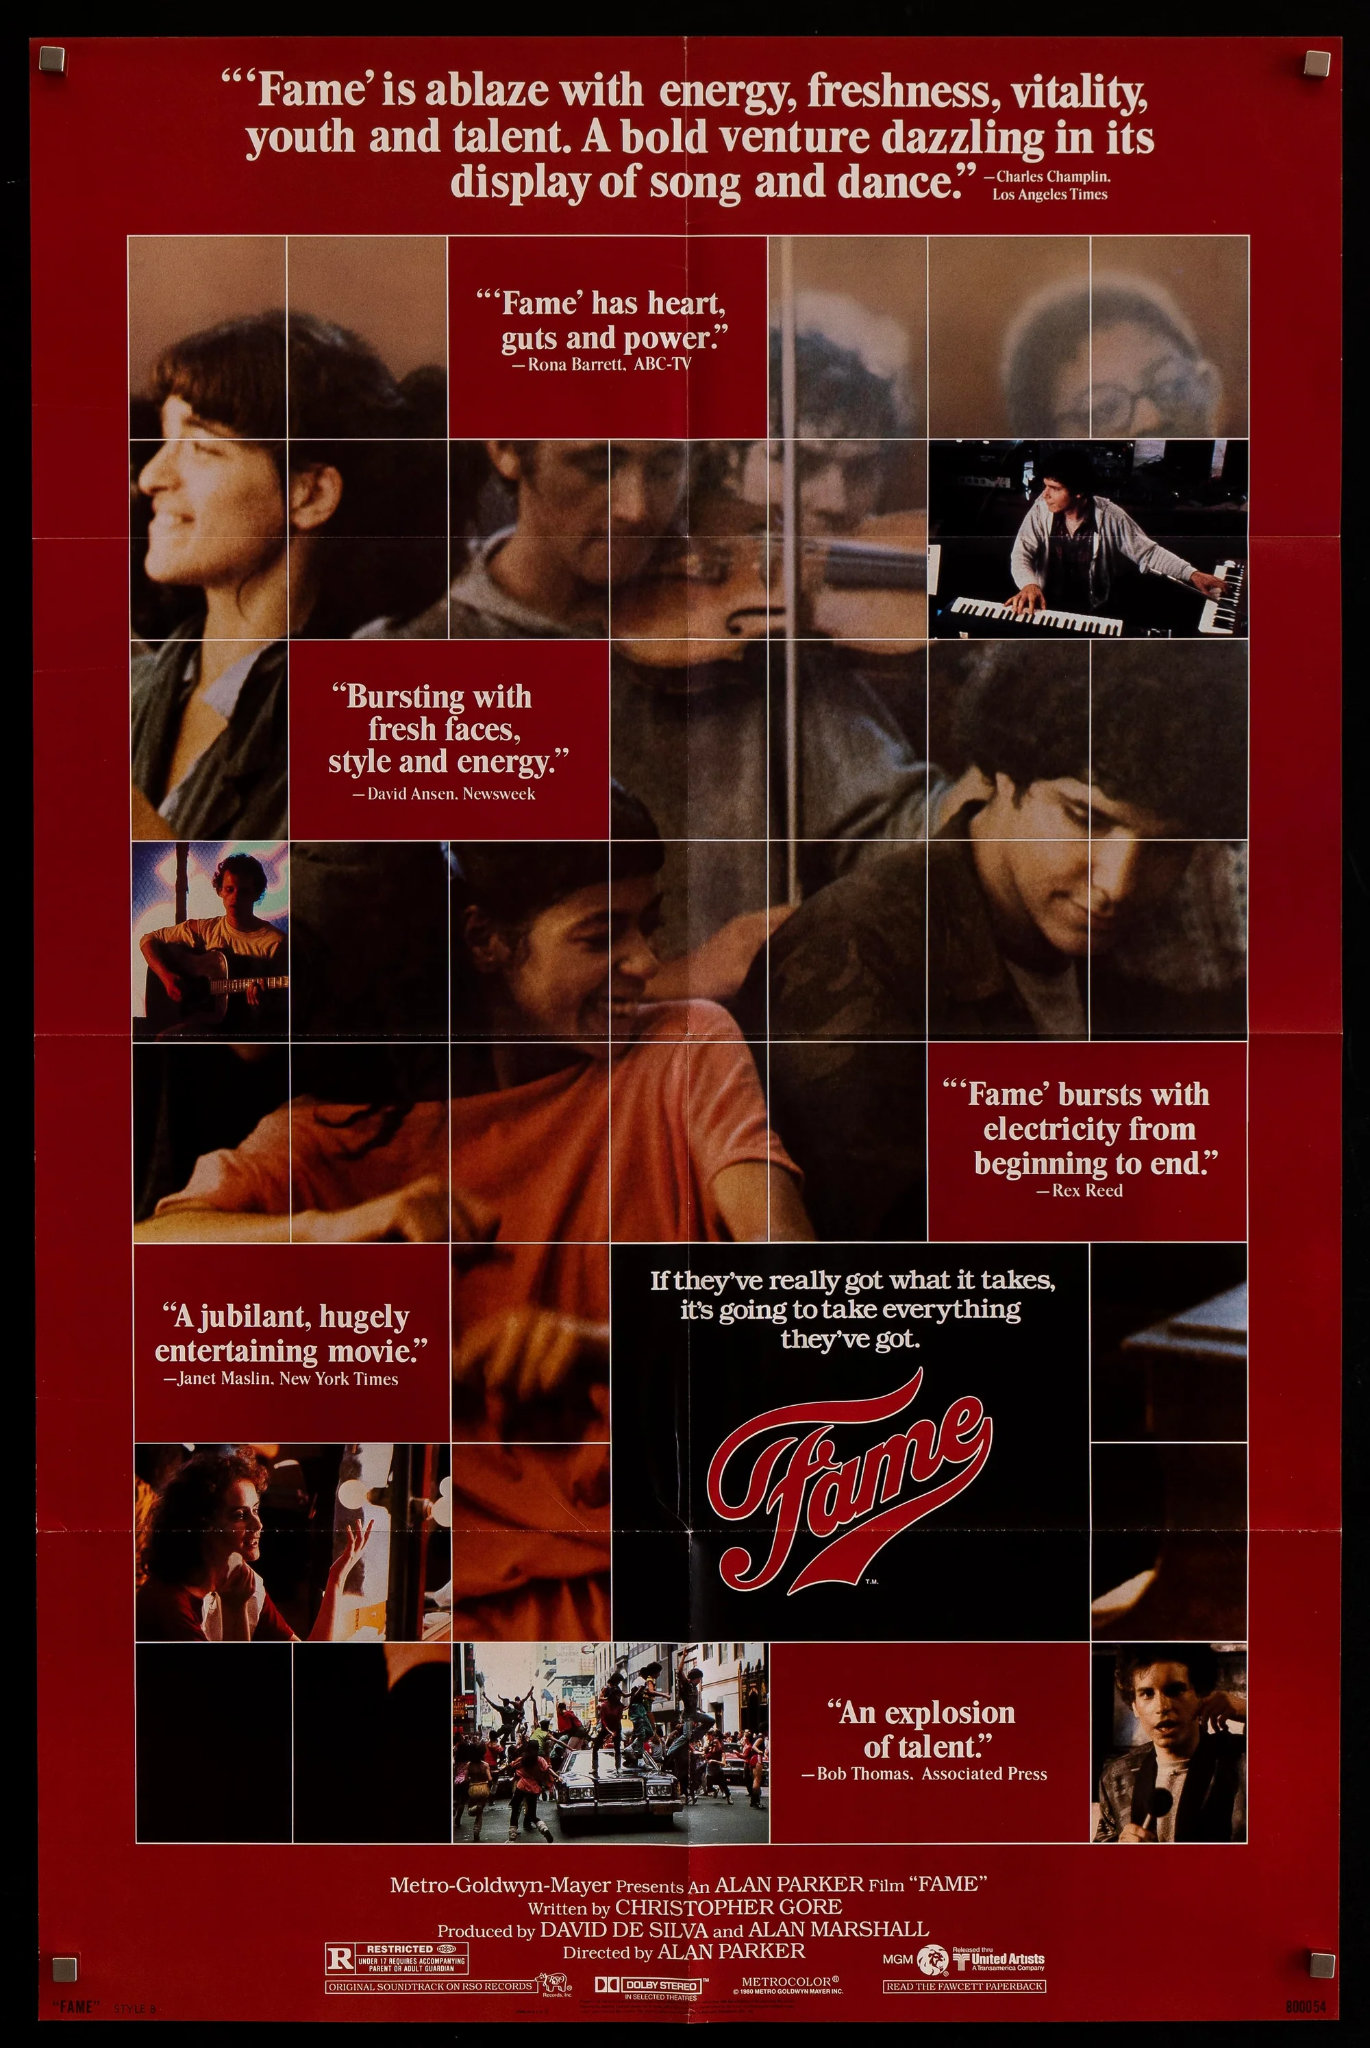 Original movie poster for "Fame" by Alan Parker (1980)